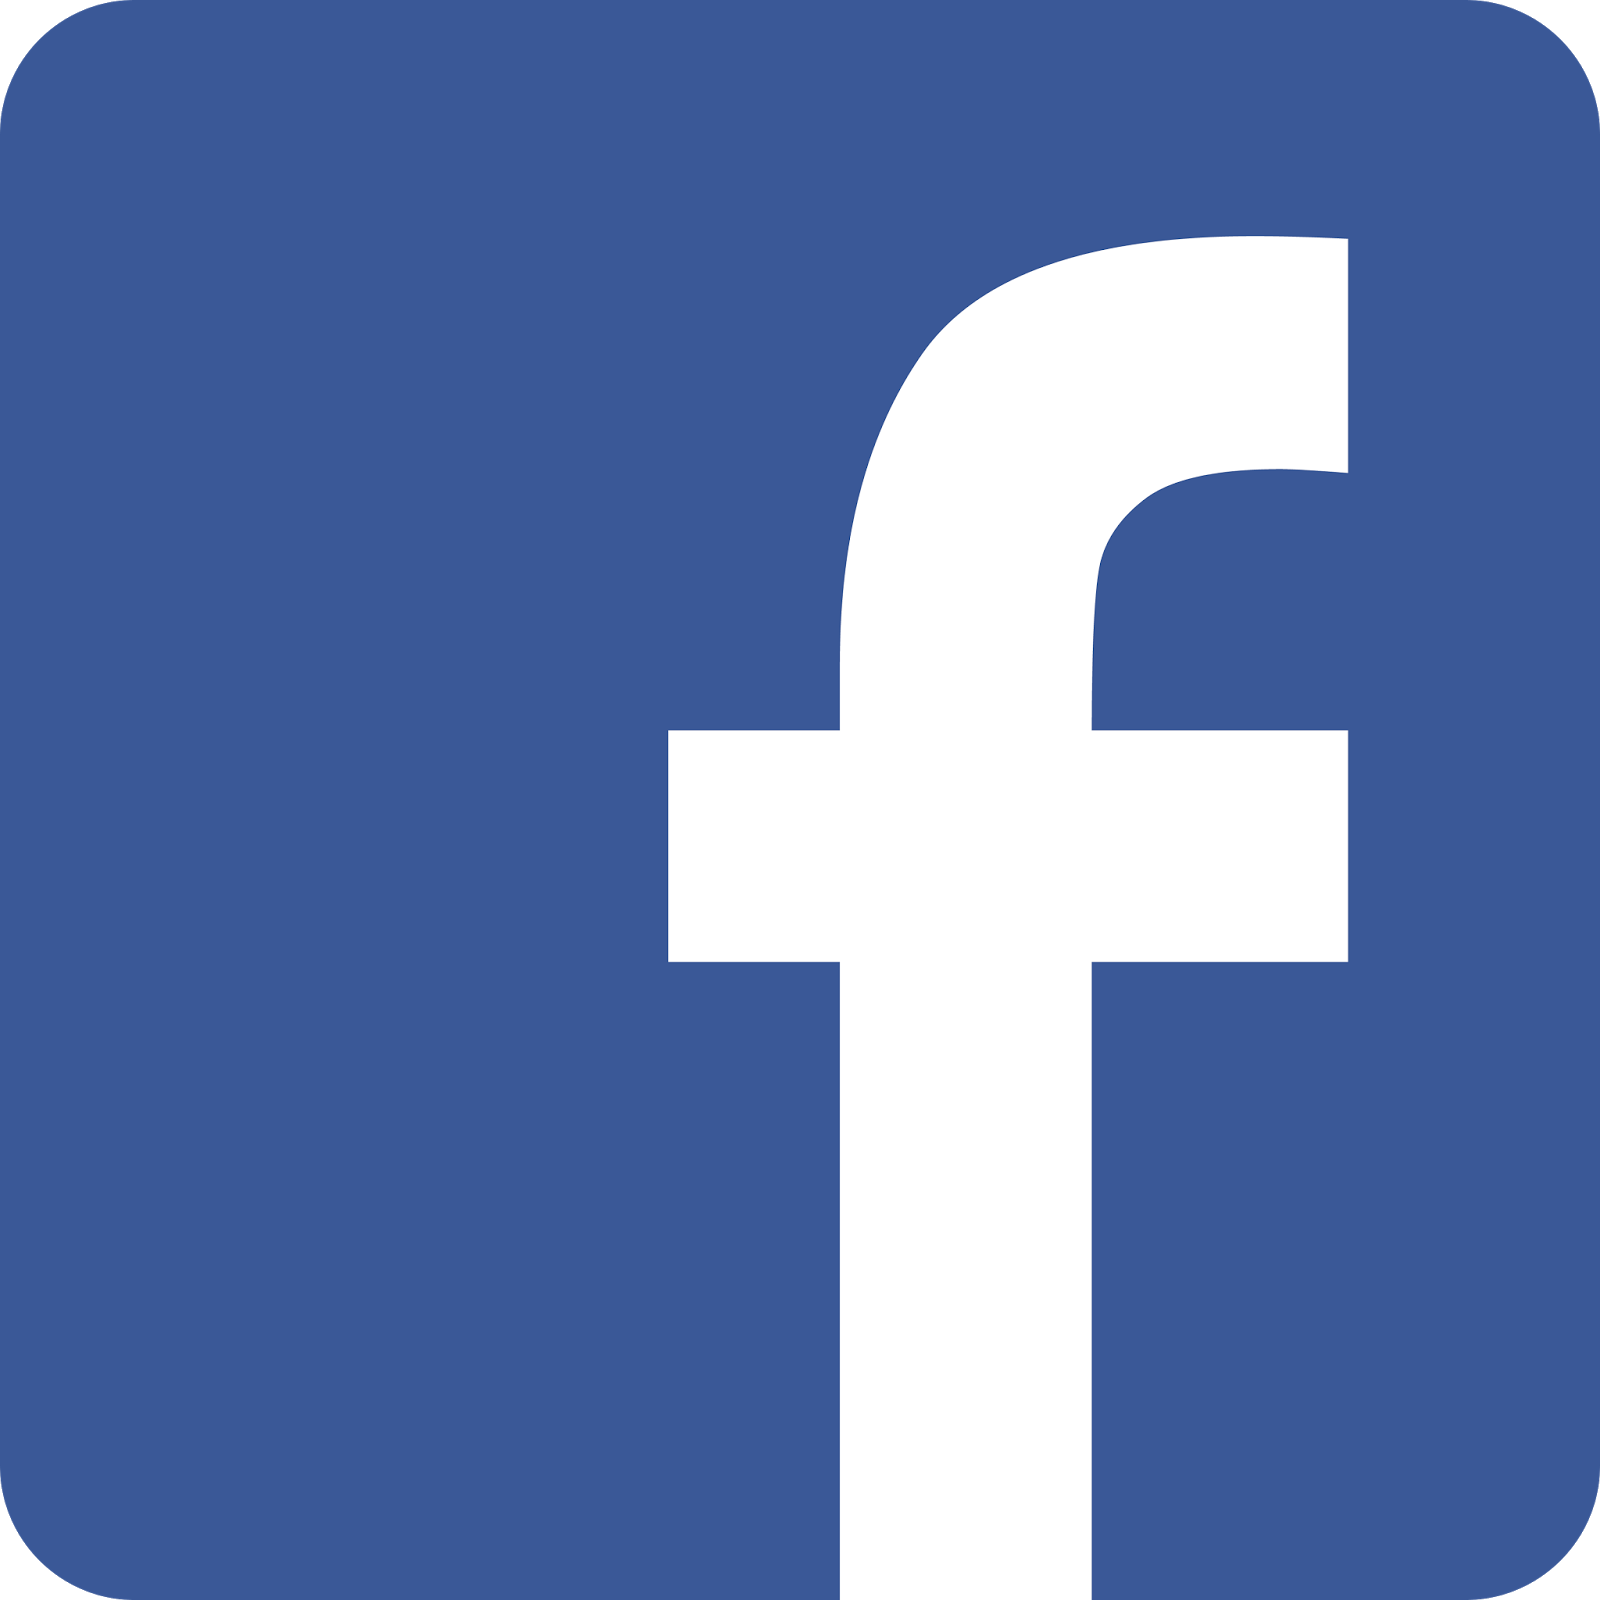 Facebook logo in circular but